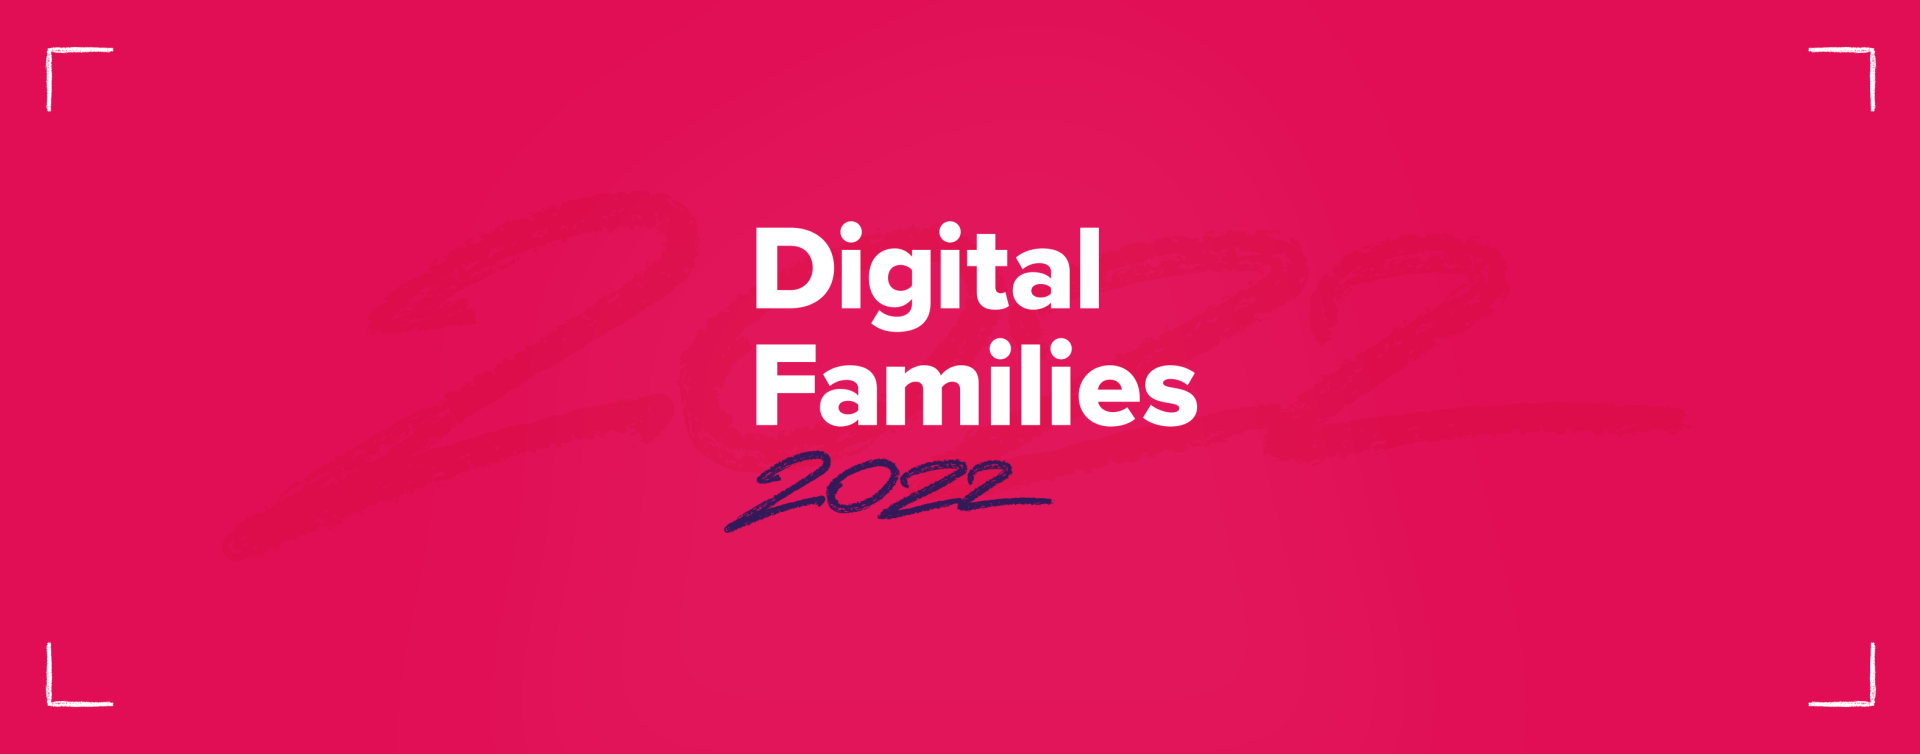 Digital Families 2022: Q&A with Dr Elly Hanson